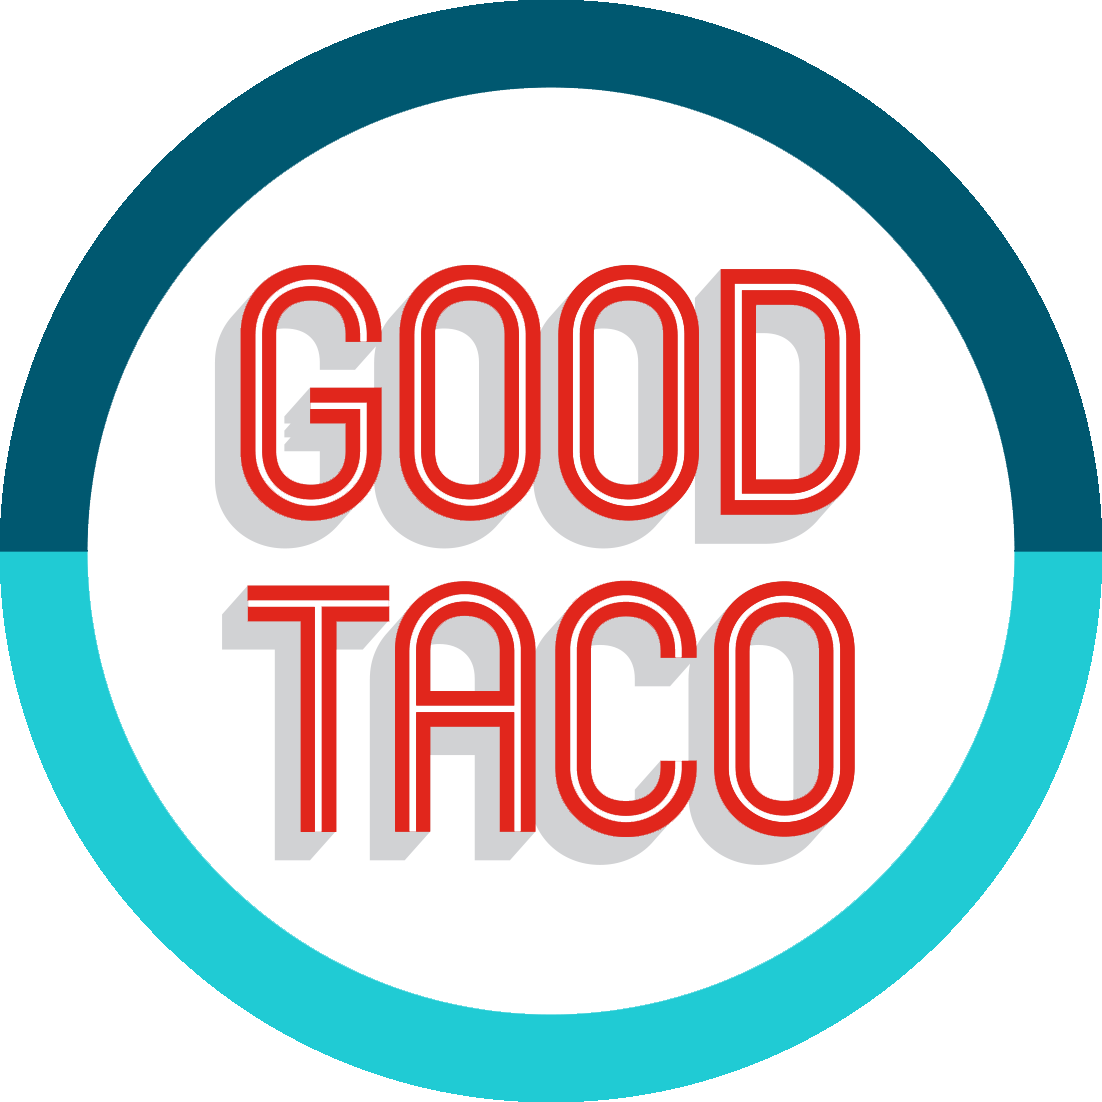 GOOD TACO - Do Good, Eat Good